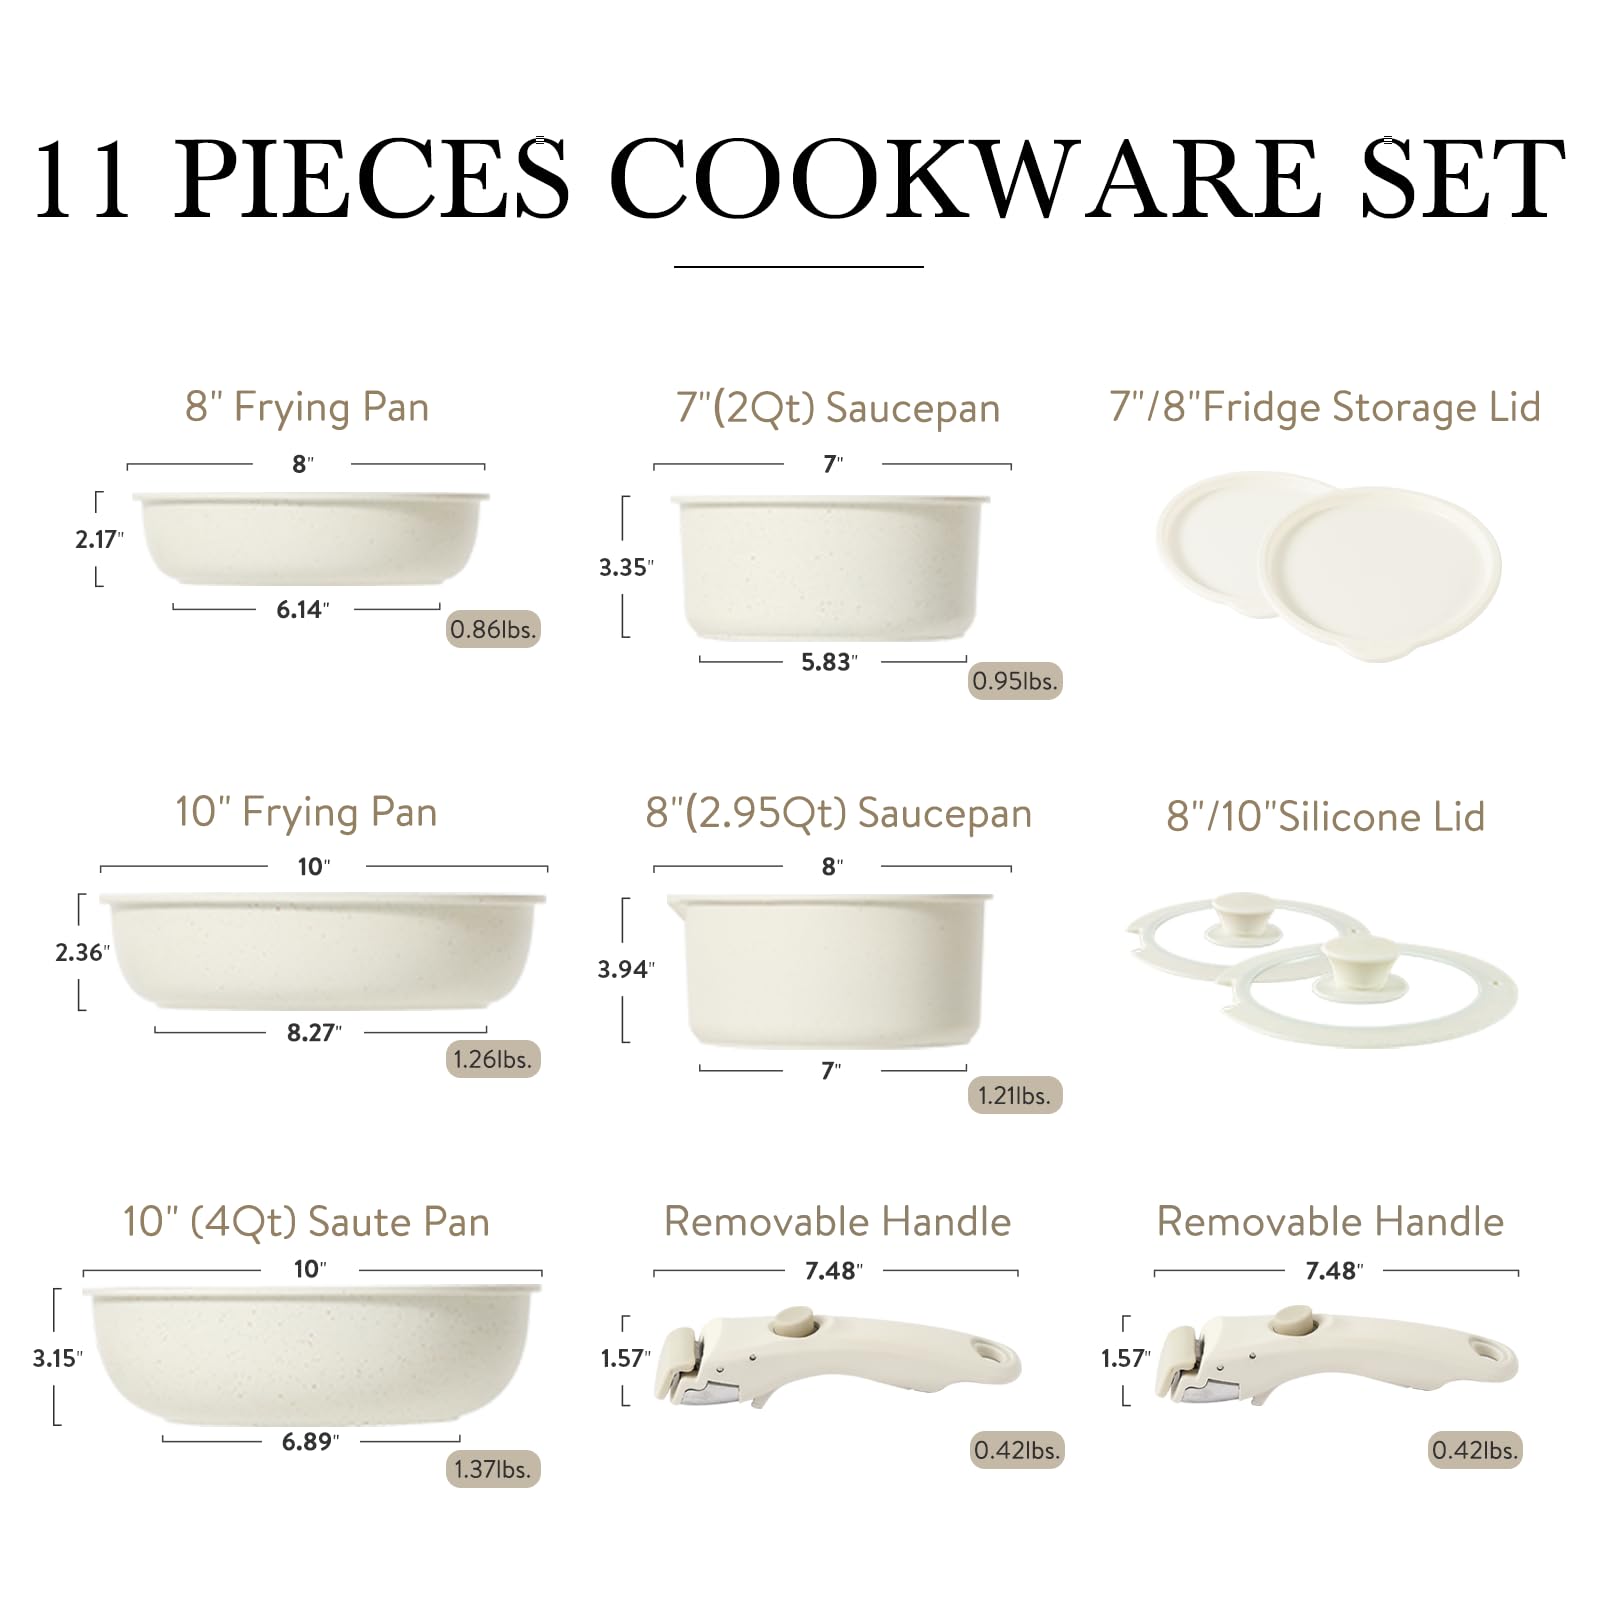 CAROTE 11pcs Pots and Pans Set, Induction Kitchen Cookware Sets Non Stick with Removable,Detachable Handle, RV Cookware Set, Oven Safe